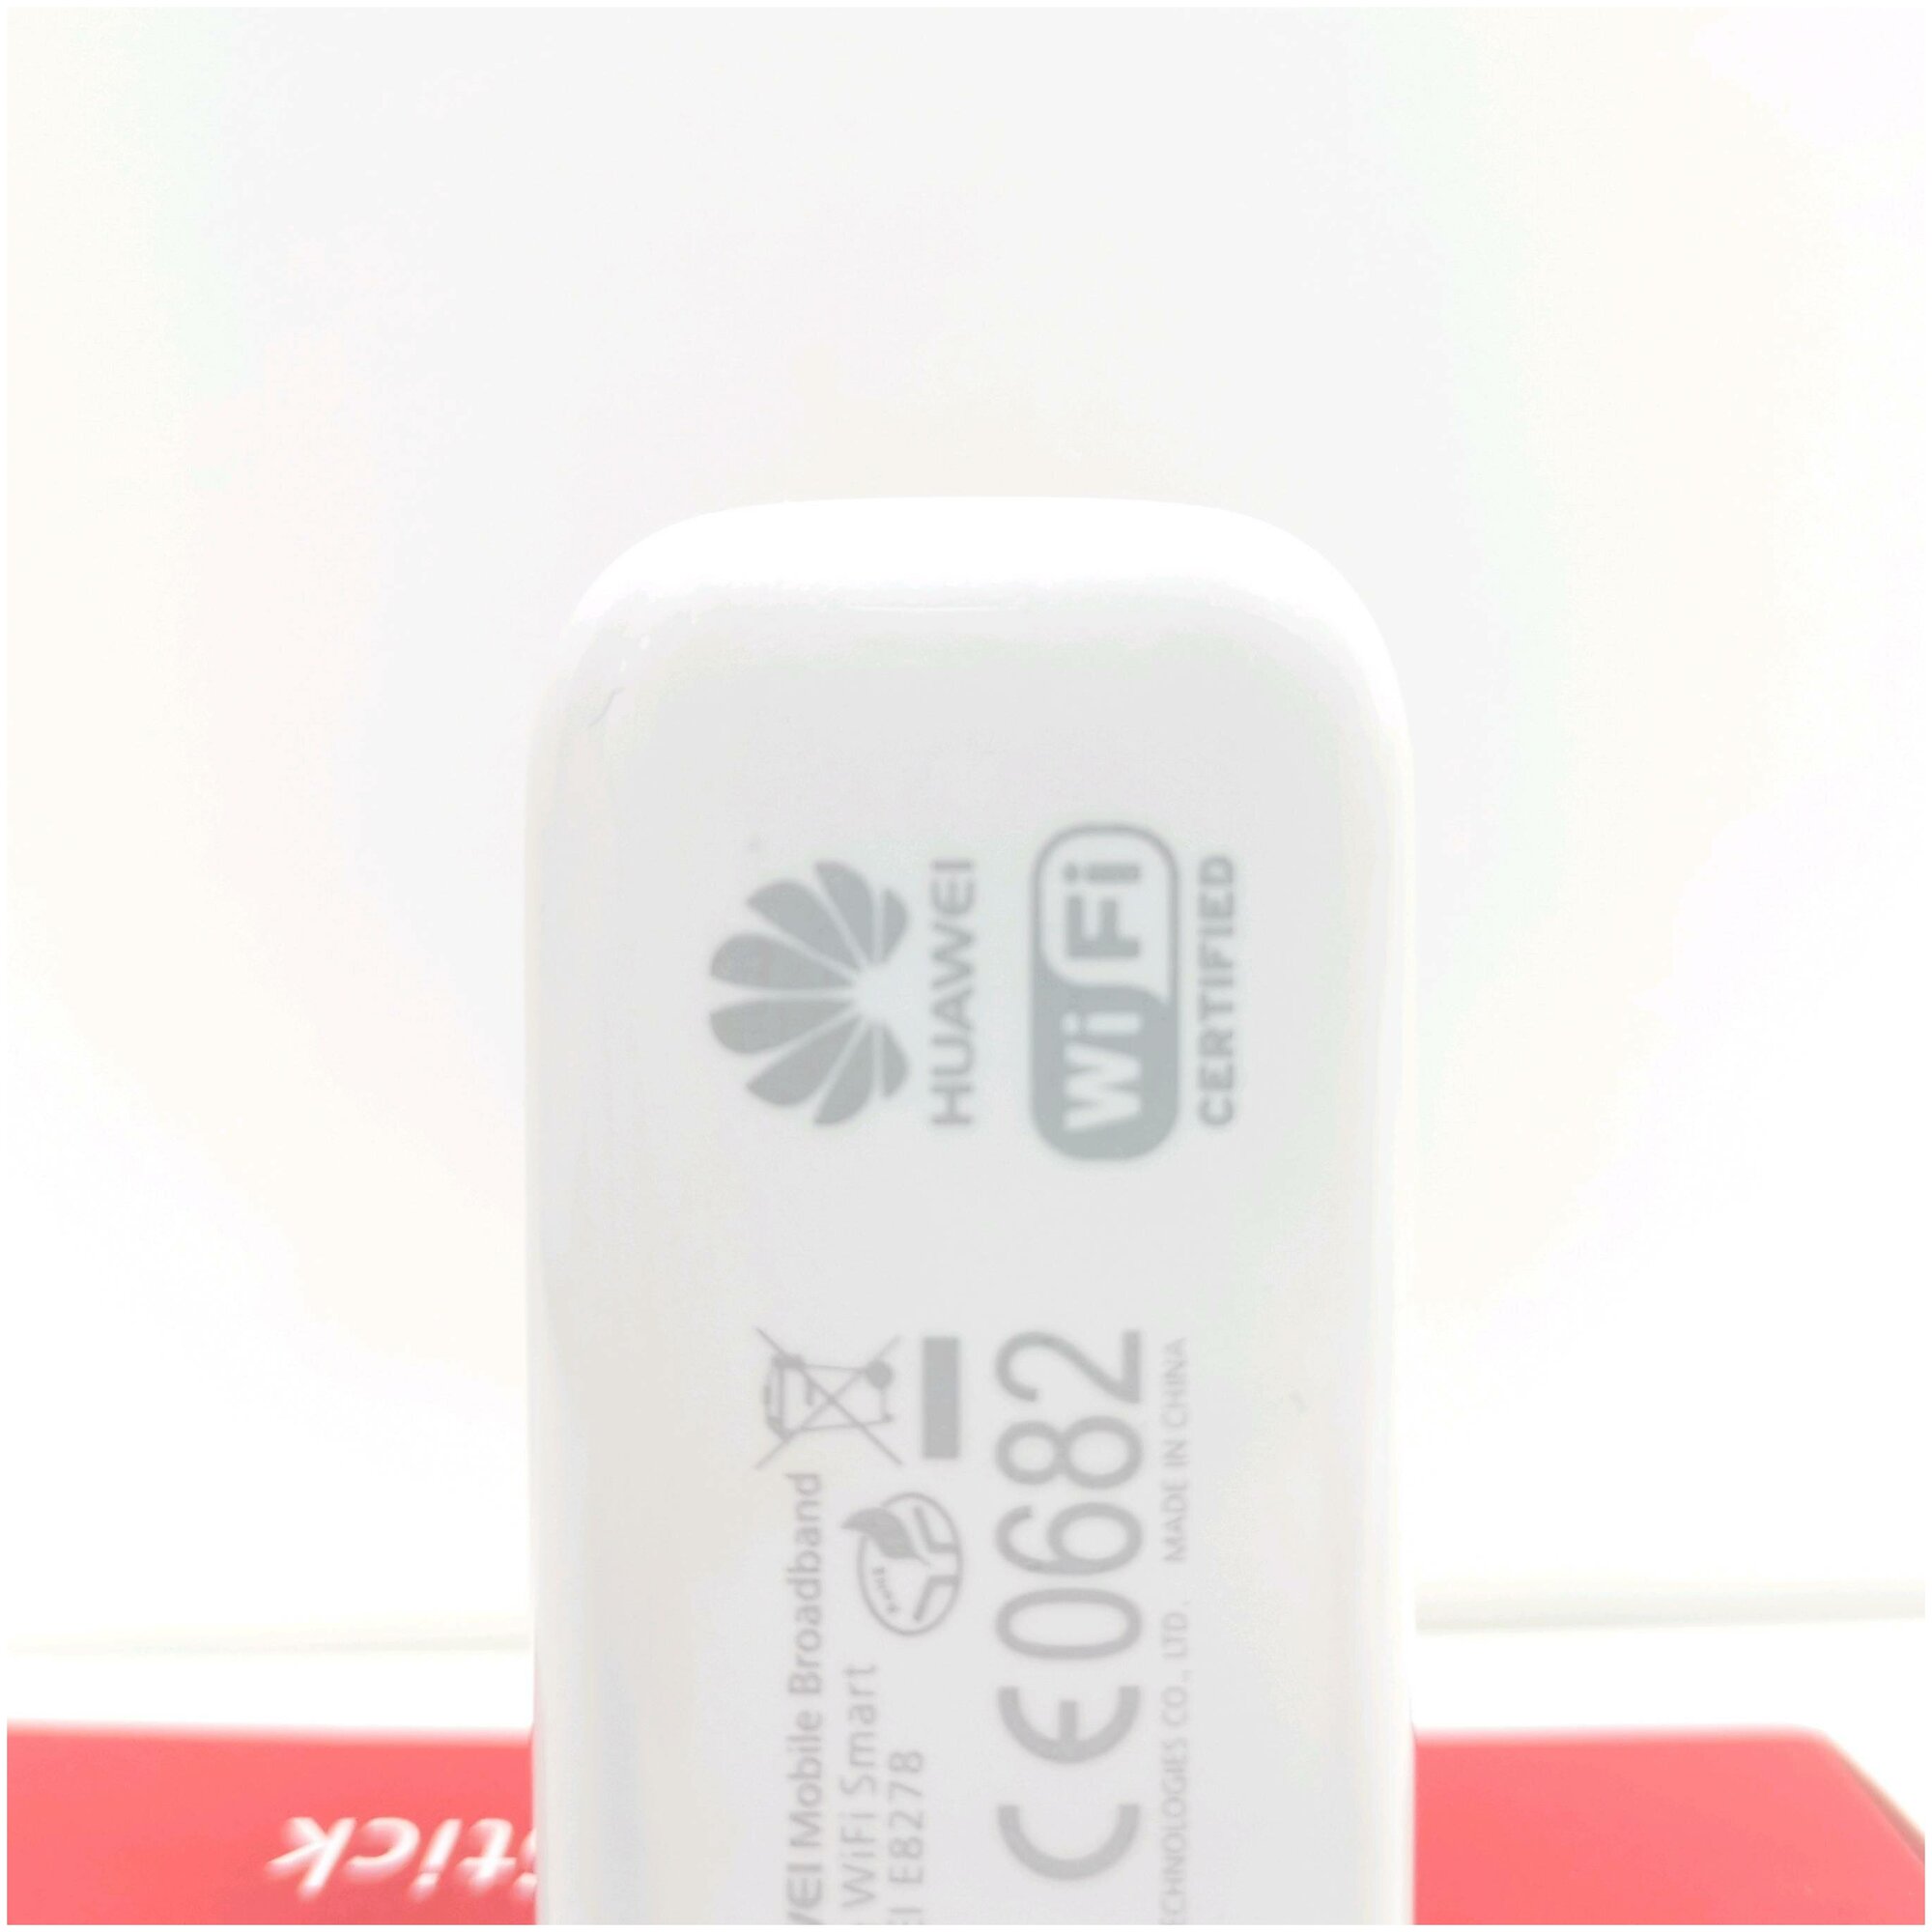 4G WiFi роутер - модем Huawei 8278 под Безлимитный Интернет